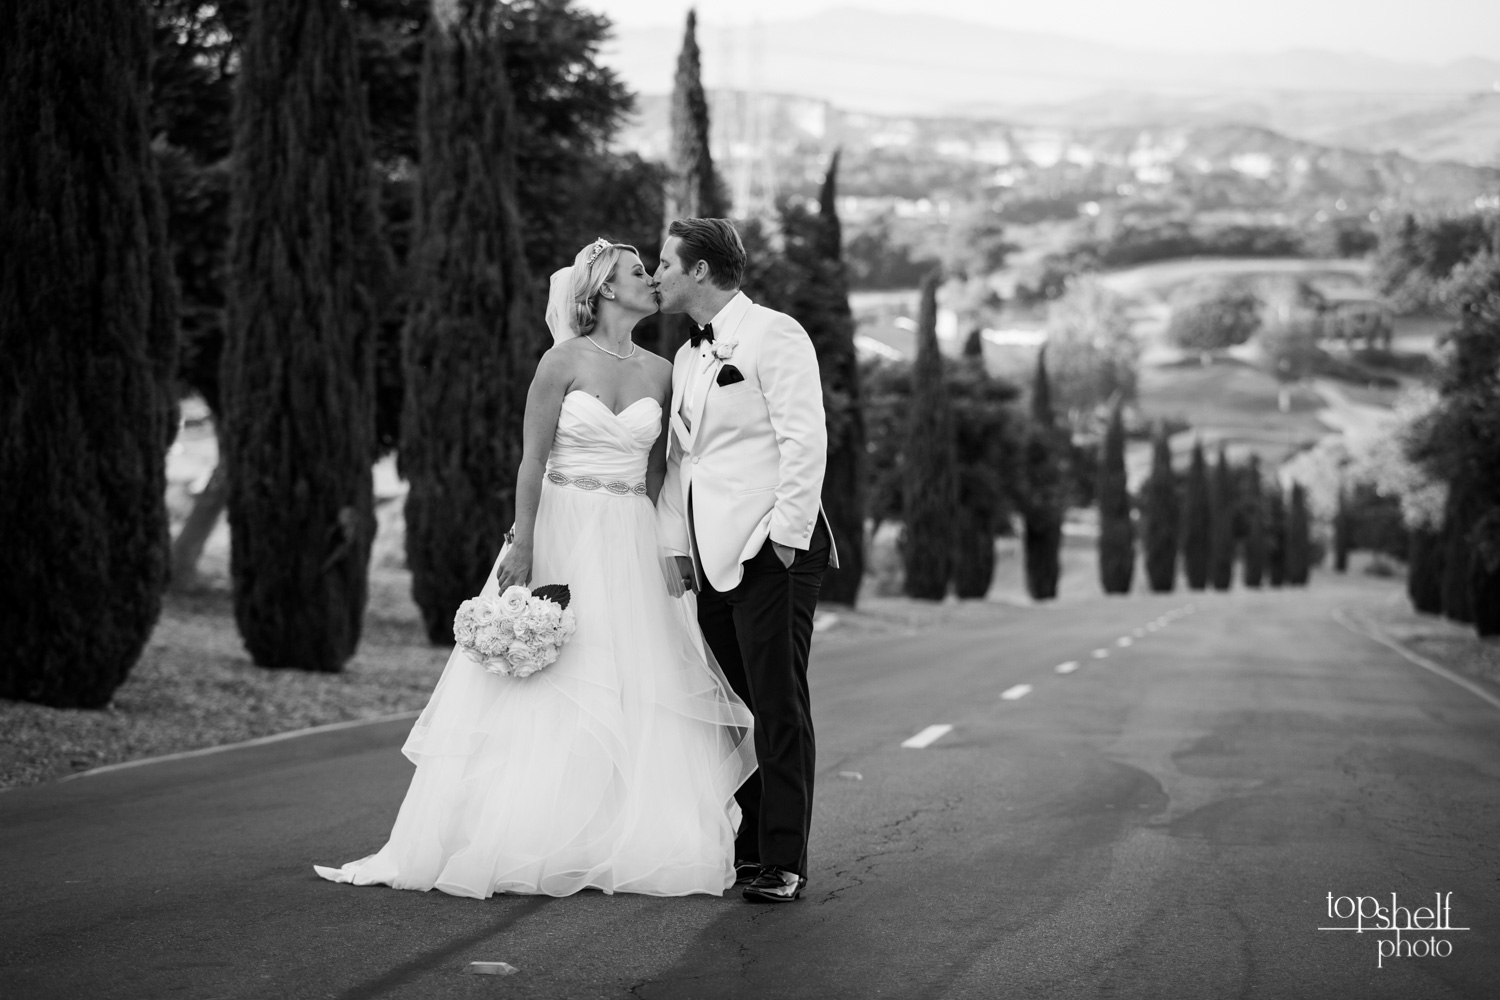 wedding-bella-collina-san-clemente-top-shelf-photo-23.jpg